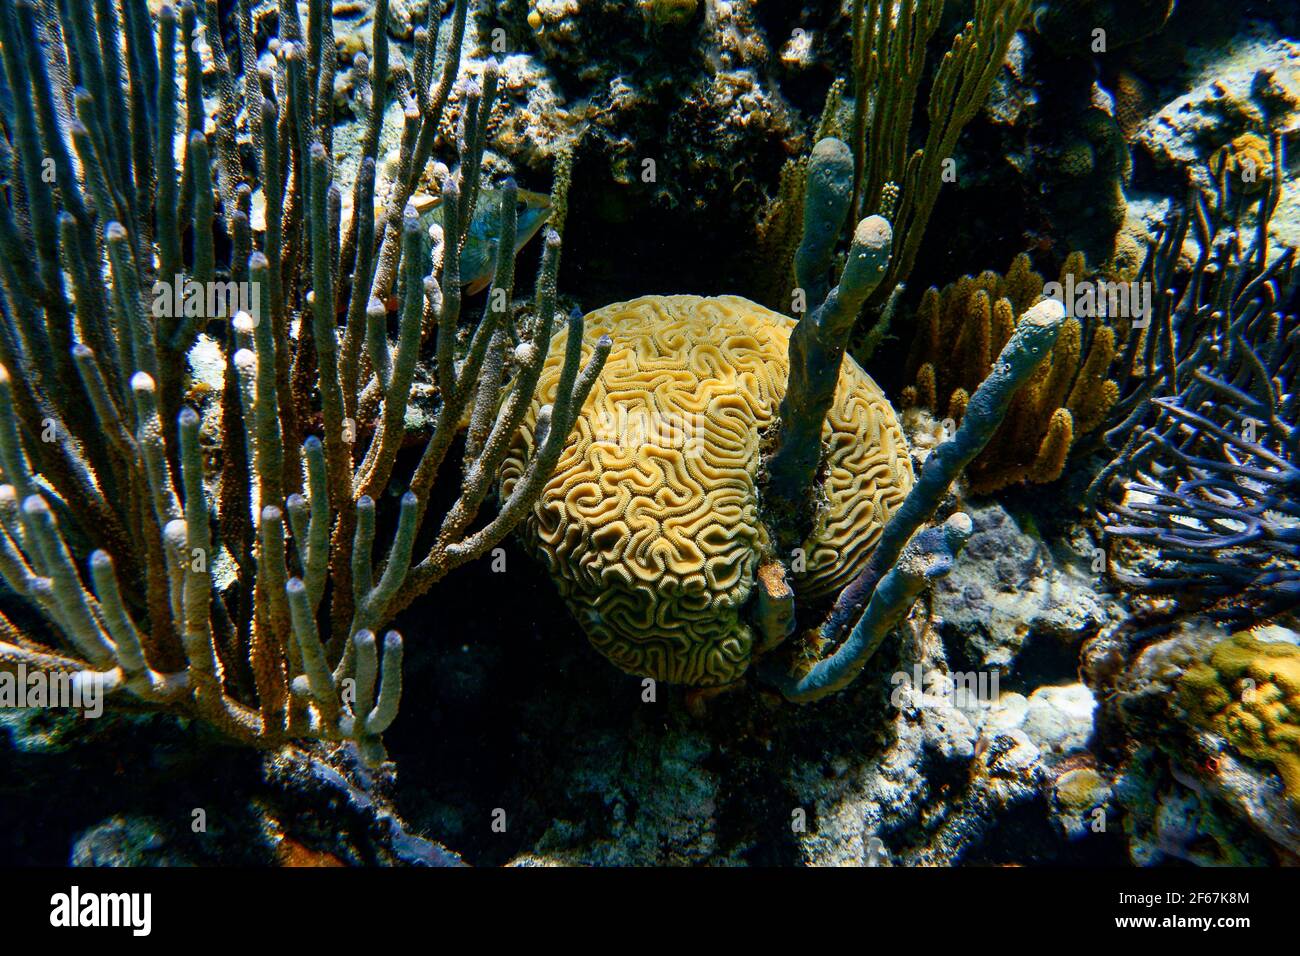 Brain coral reef Stock Photo